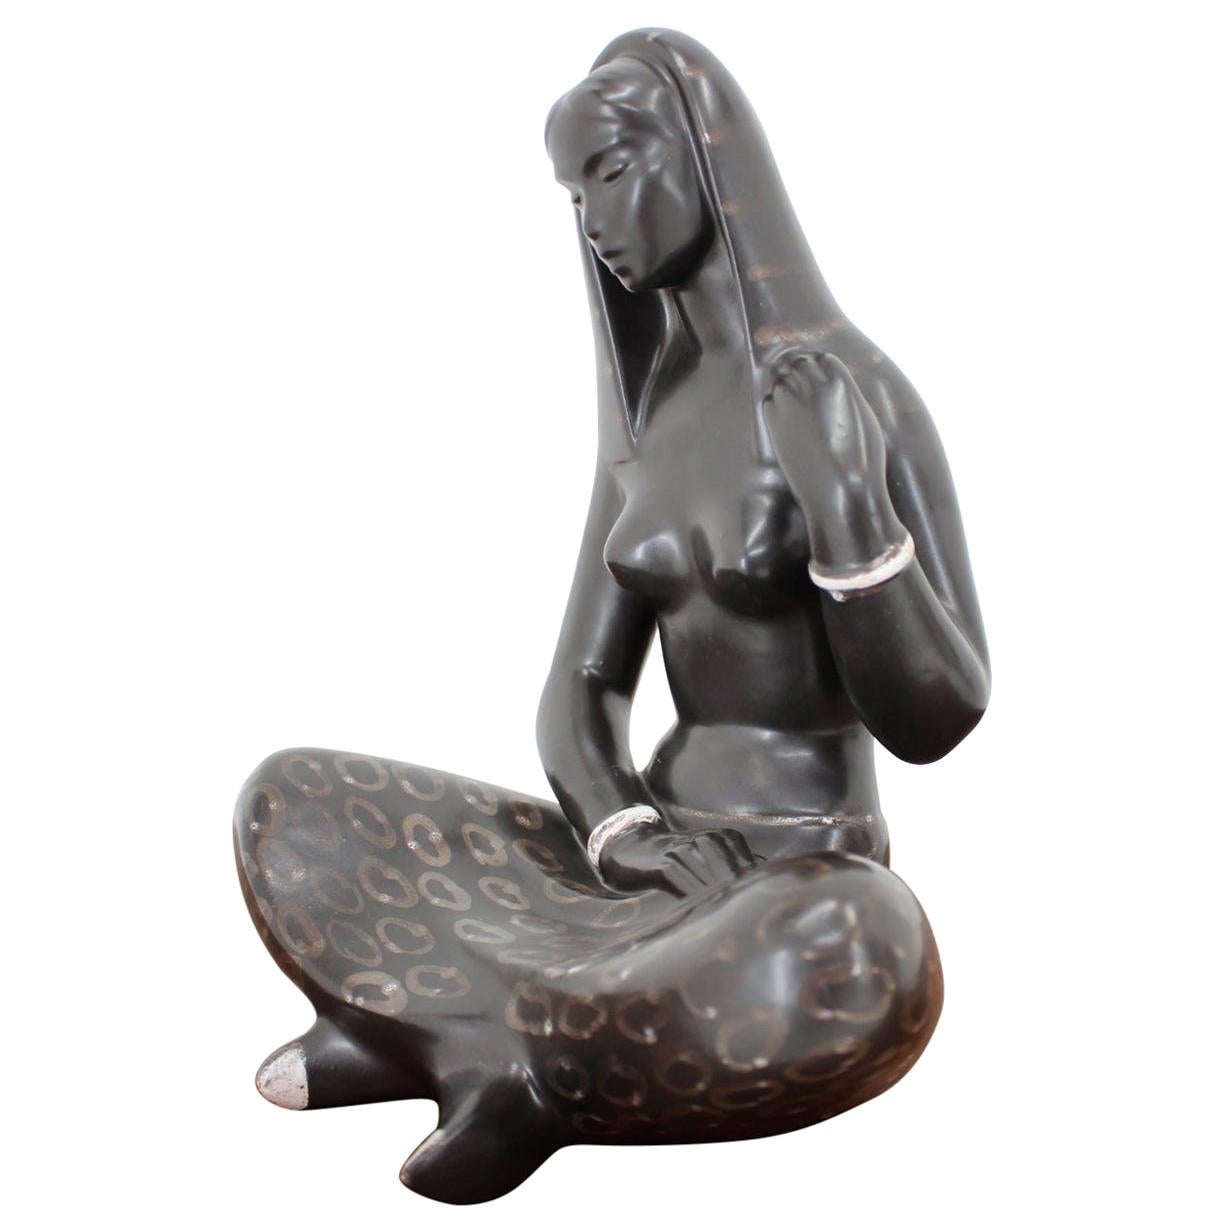 Design Midcentury Ceramic Sculpture "Lady" by Jitka Forejtova, 1960s